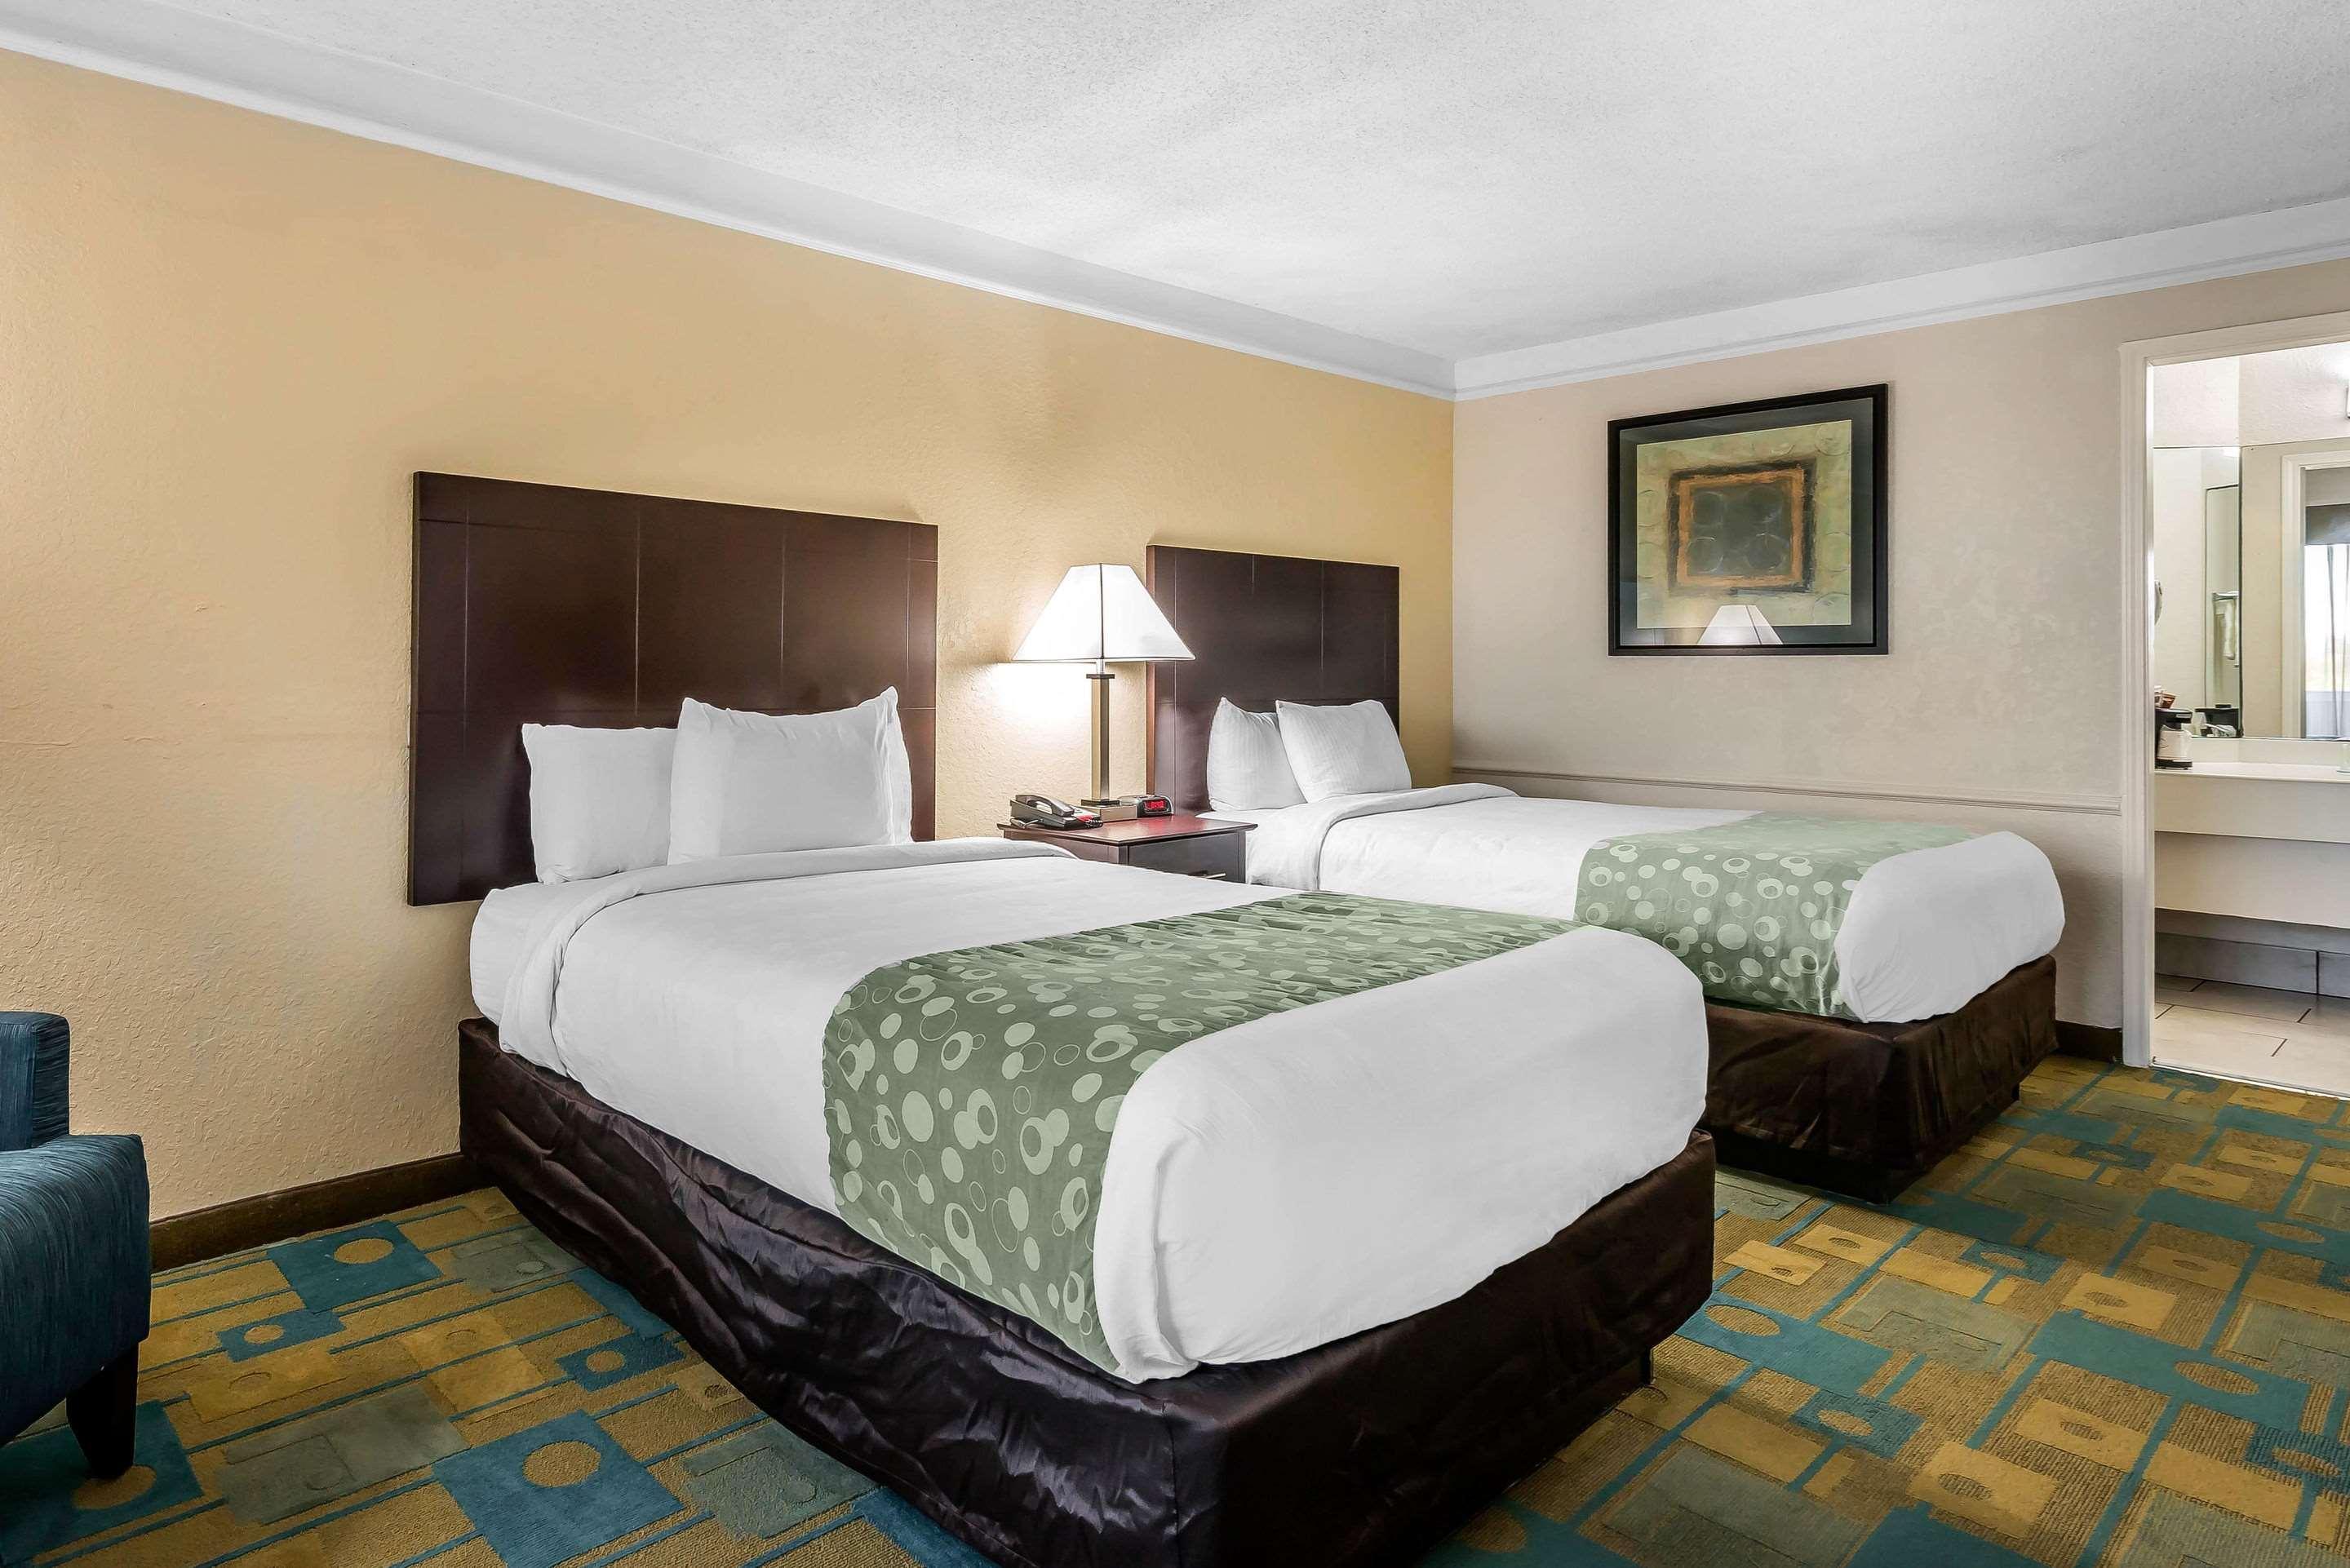 Hotel Quality Inn At International Drive Orlando | BestDay.com